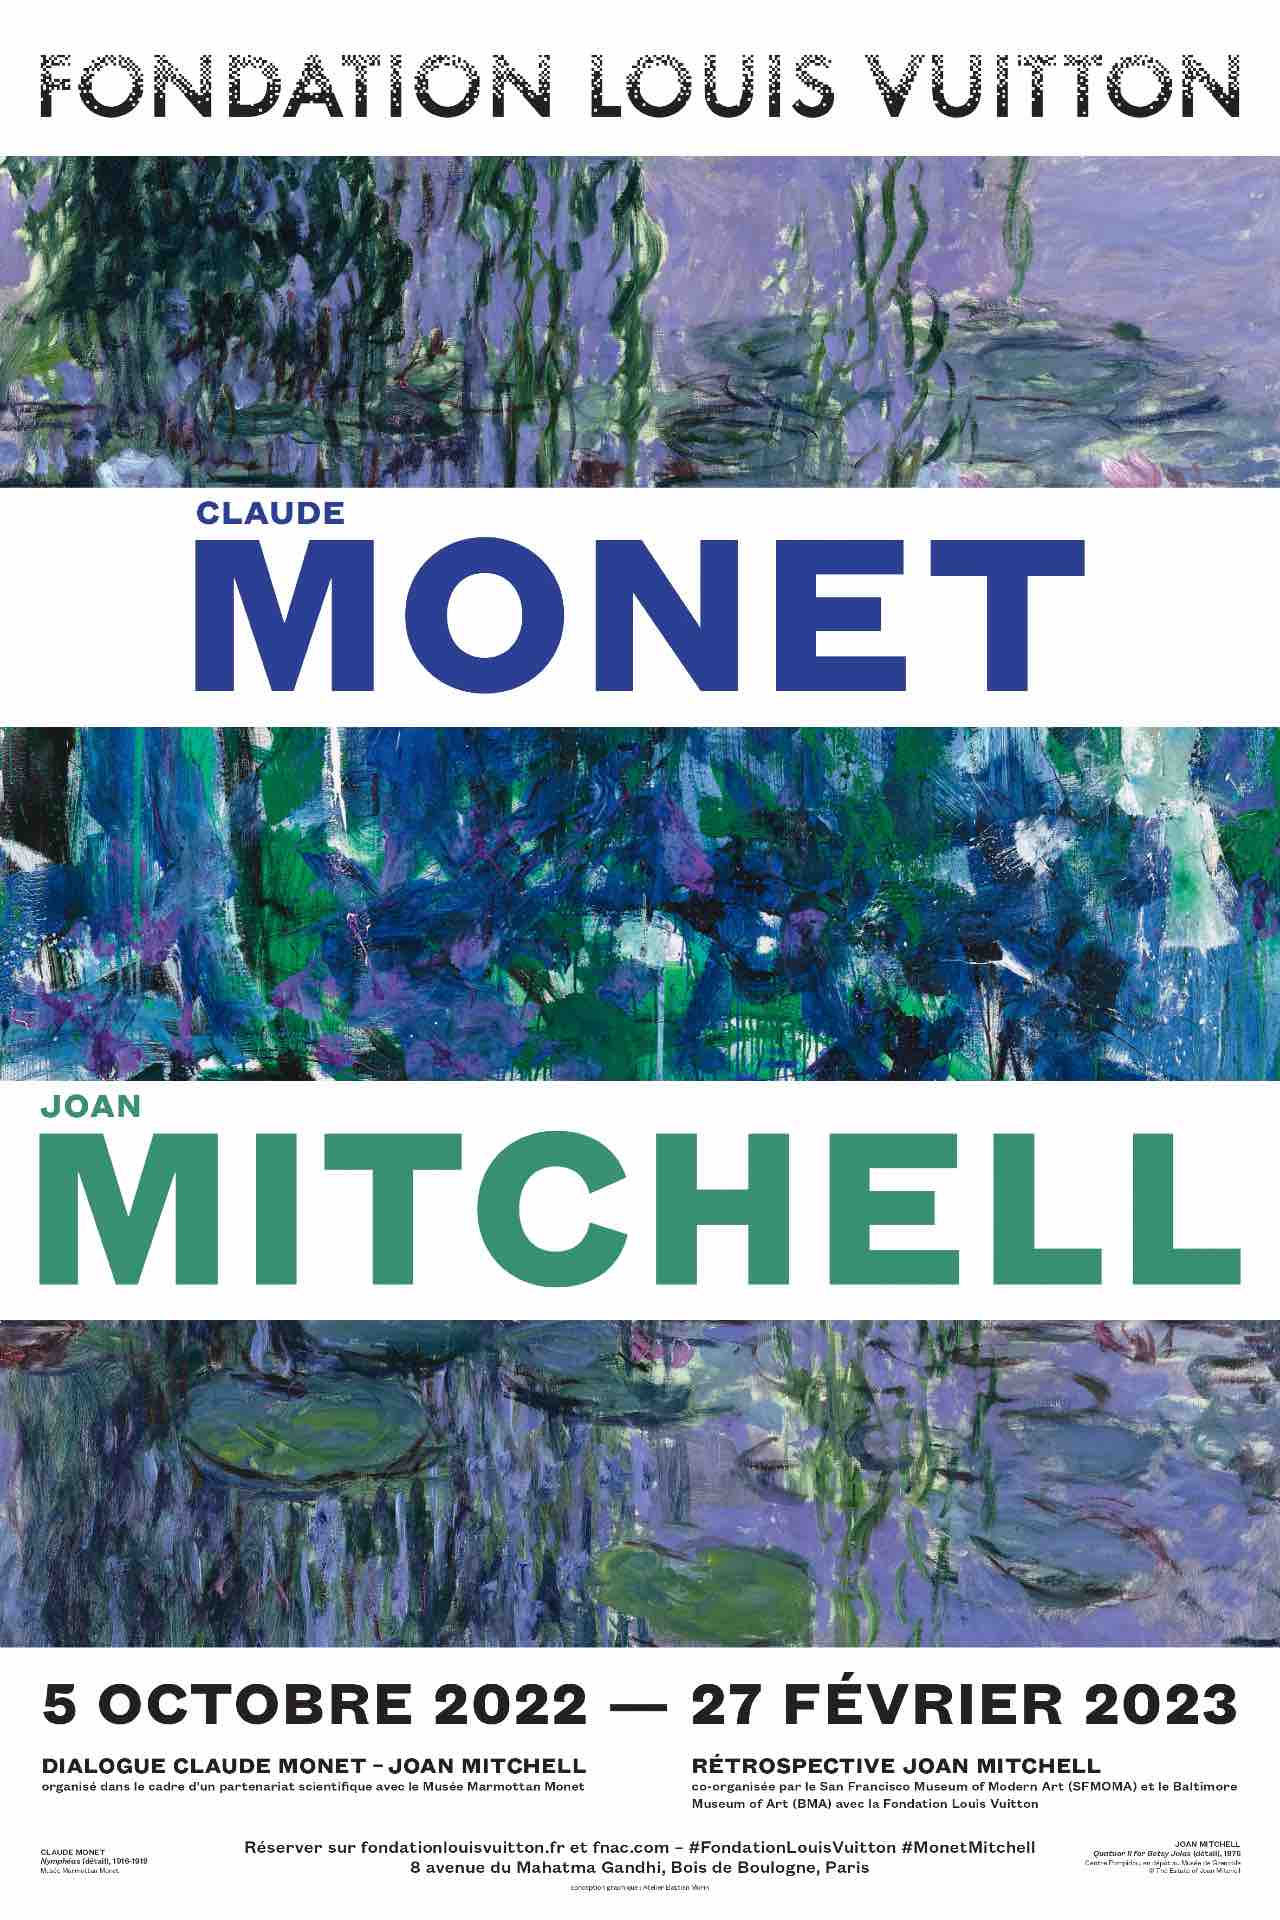 Monet - Mitchell exhibition, Fondation Louis Vuitton, until February 2023